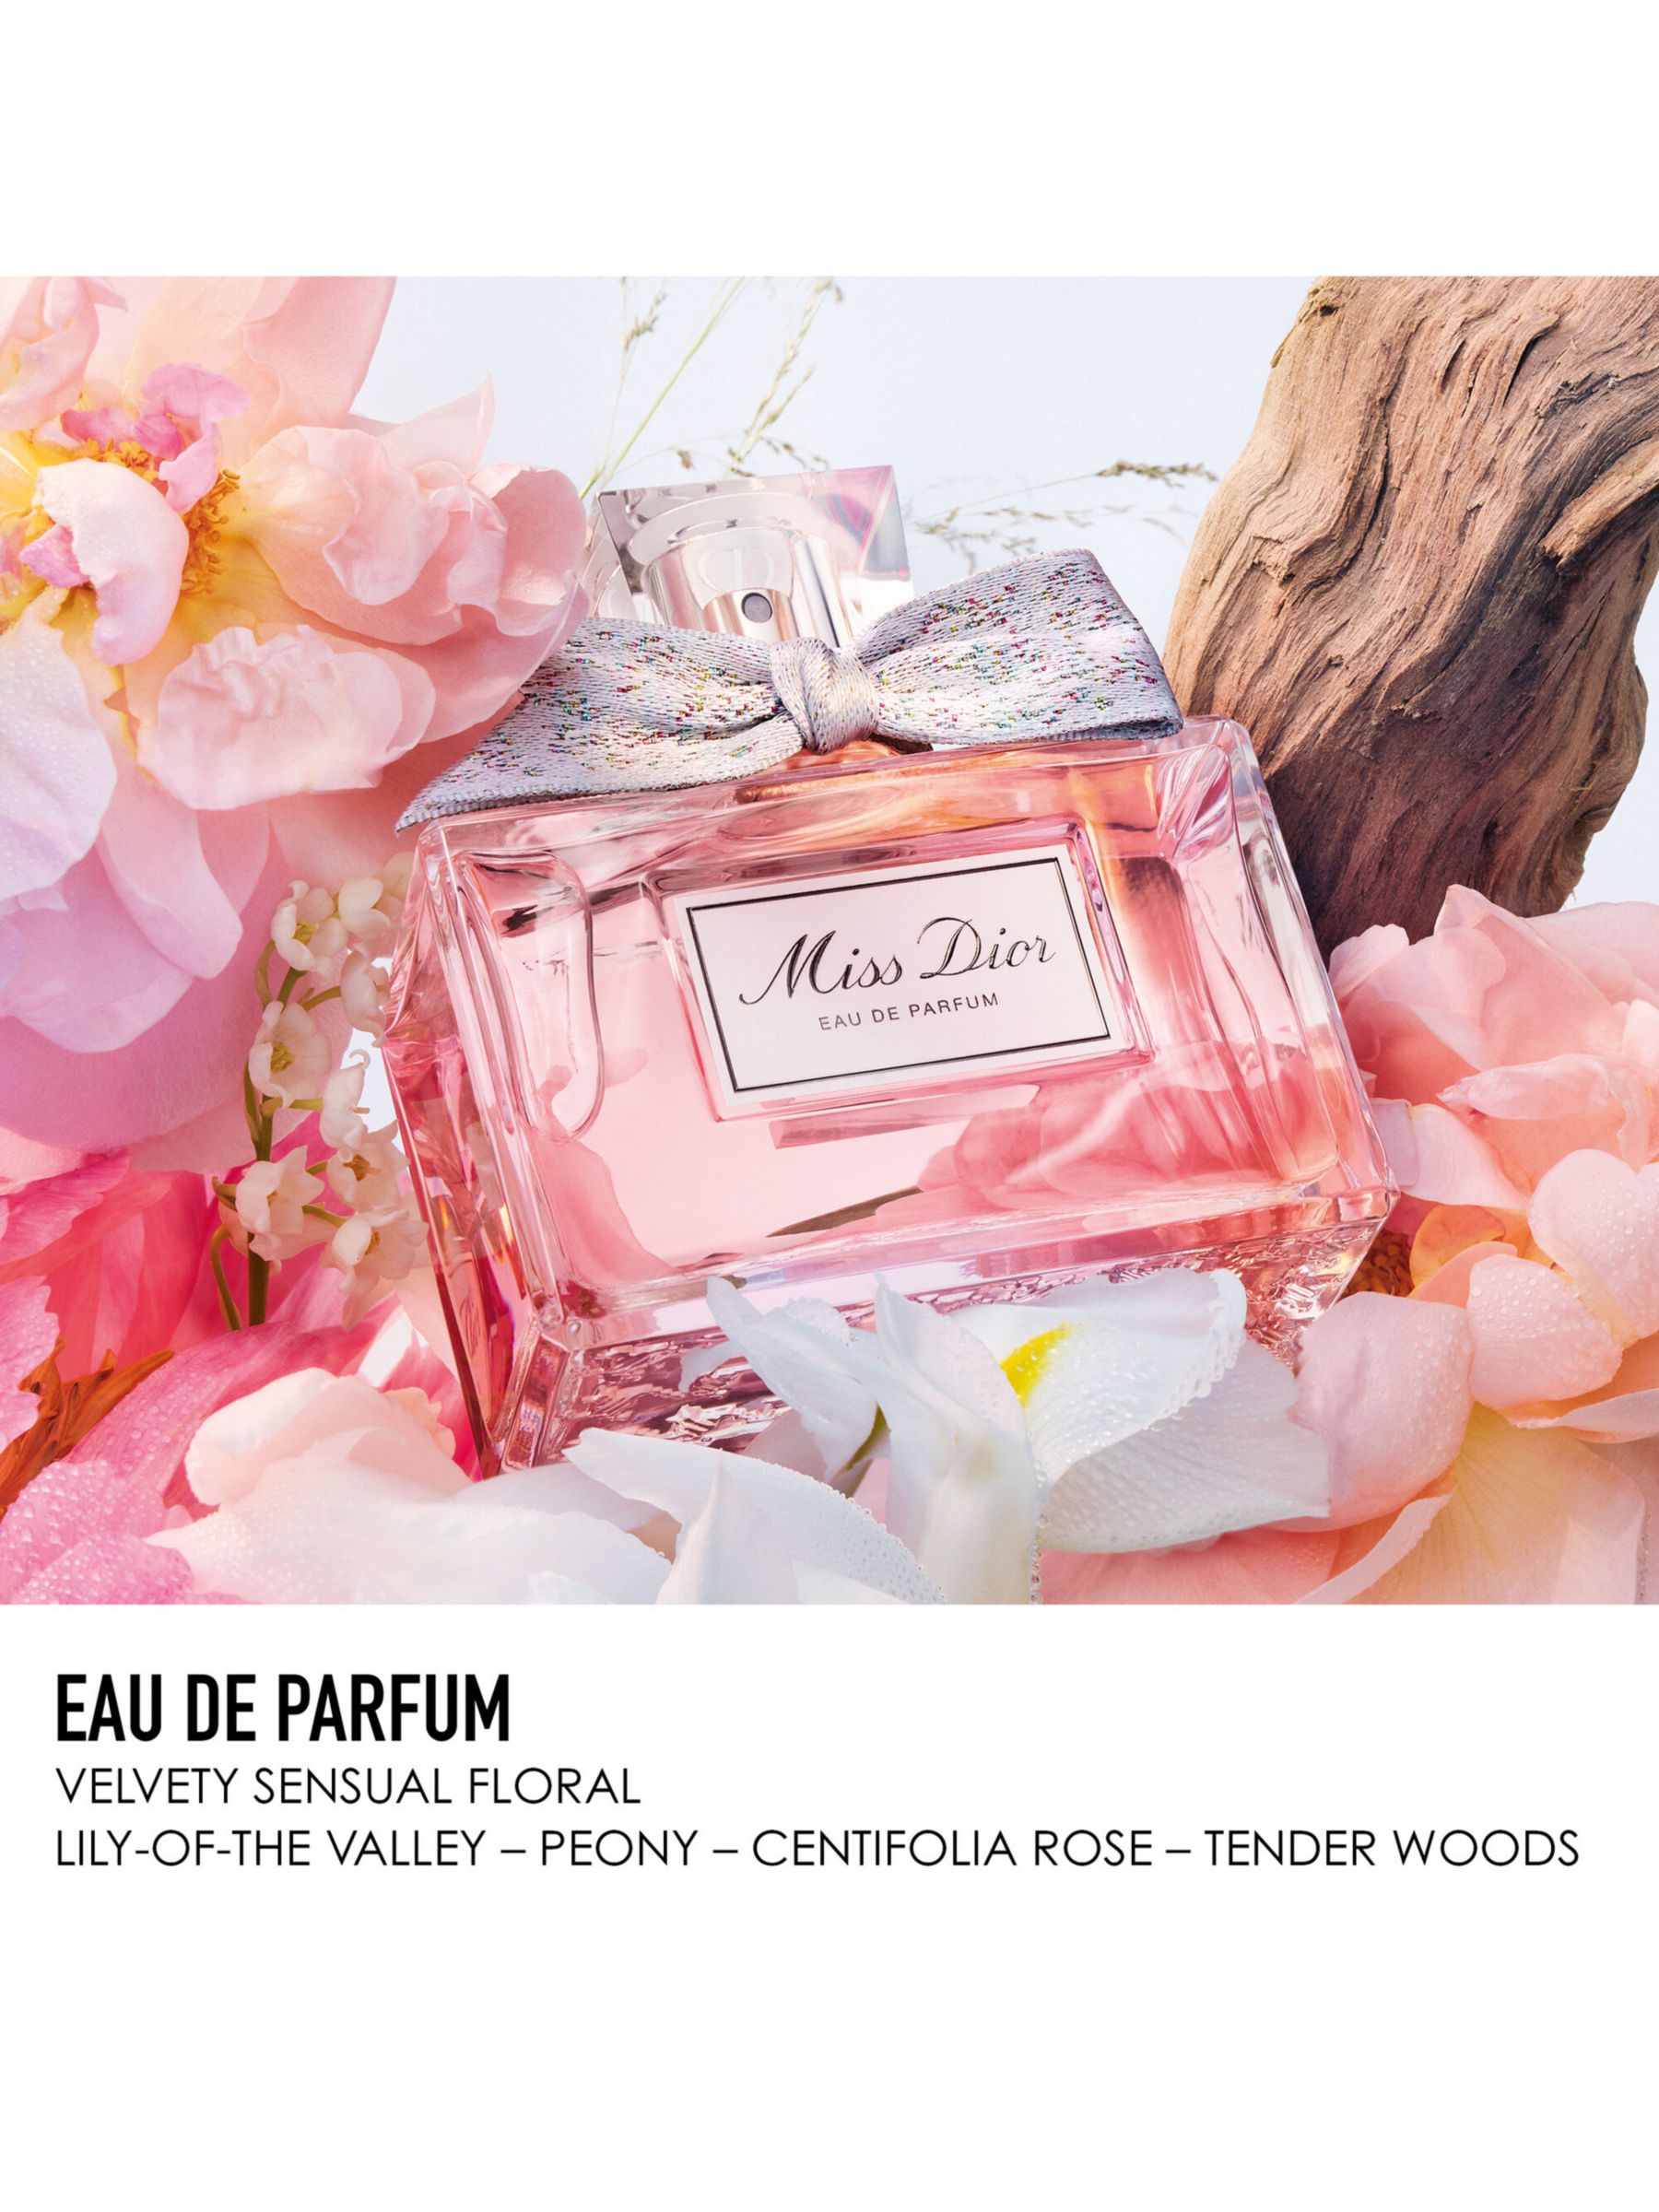 DIOR Miss DIOR Eau de Parfum, 30ml at John Lewis & Partners